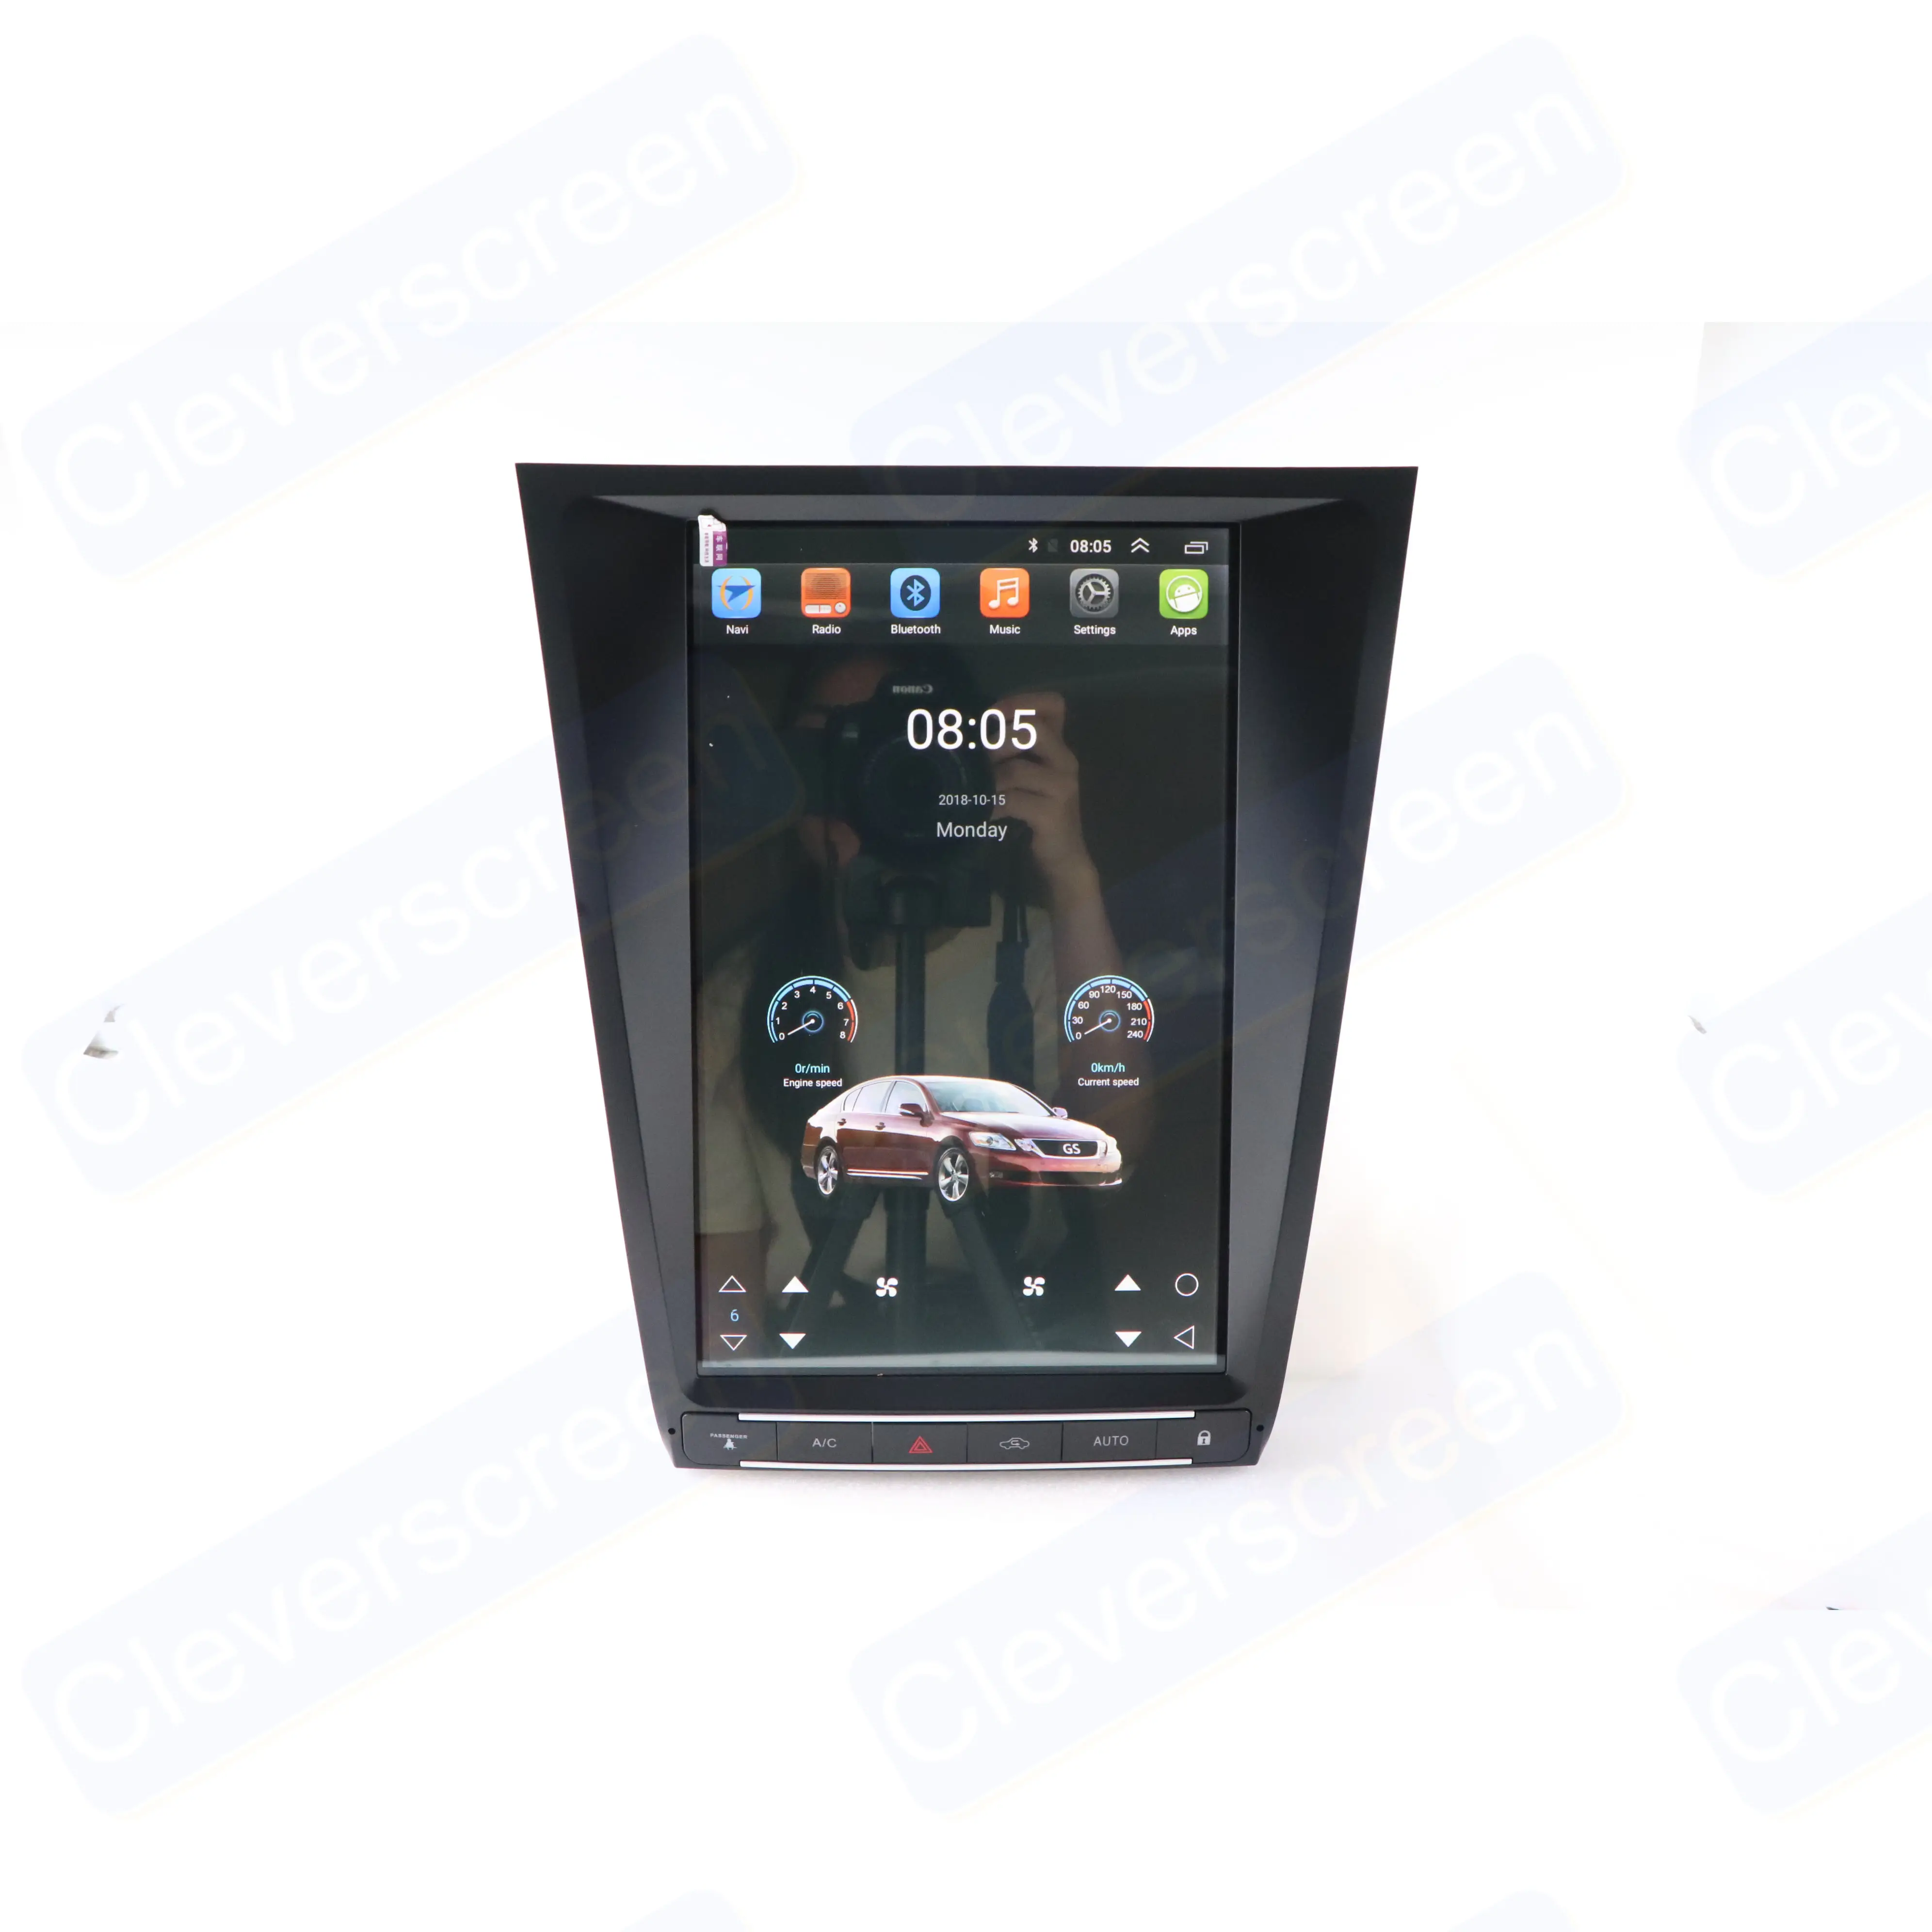 टेस्ला HD 12.8 ''टचस्क्रीन लेक्सस जी एस 300 के लिए 2004-2011 एंड्रॉयड कार स्टीरियो डीवीडी ऑडियो रेडियो प्लेयर जीपीएस नेविगेशन प्रणाली सी. पी.